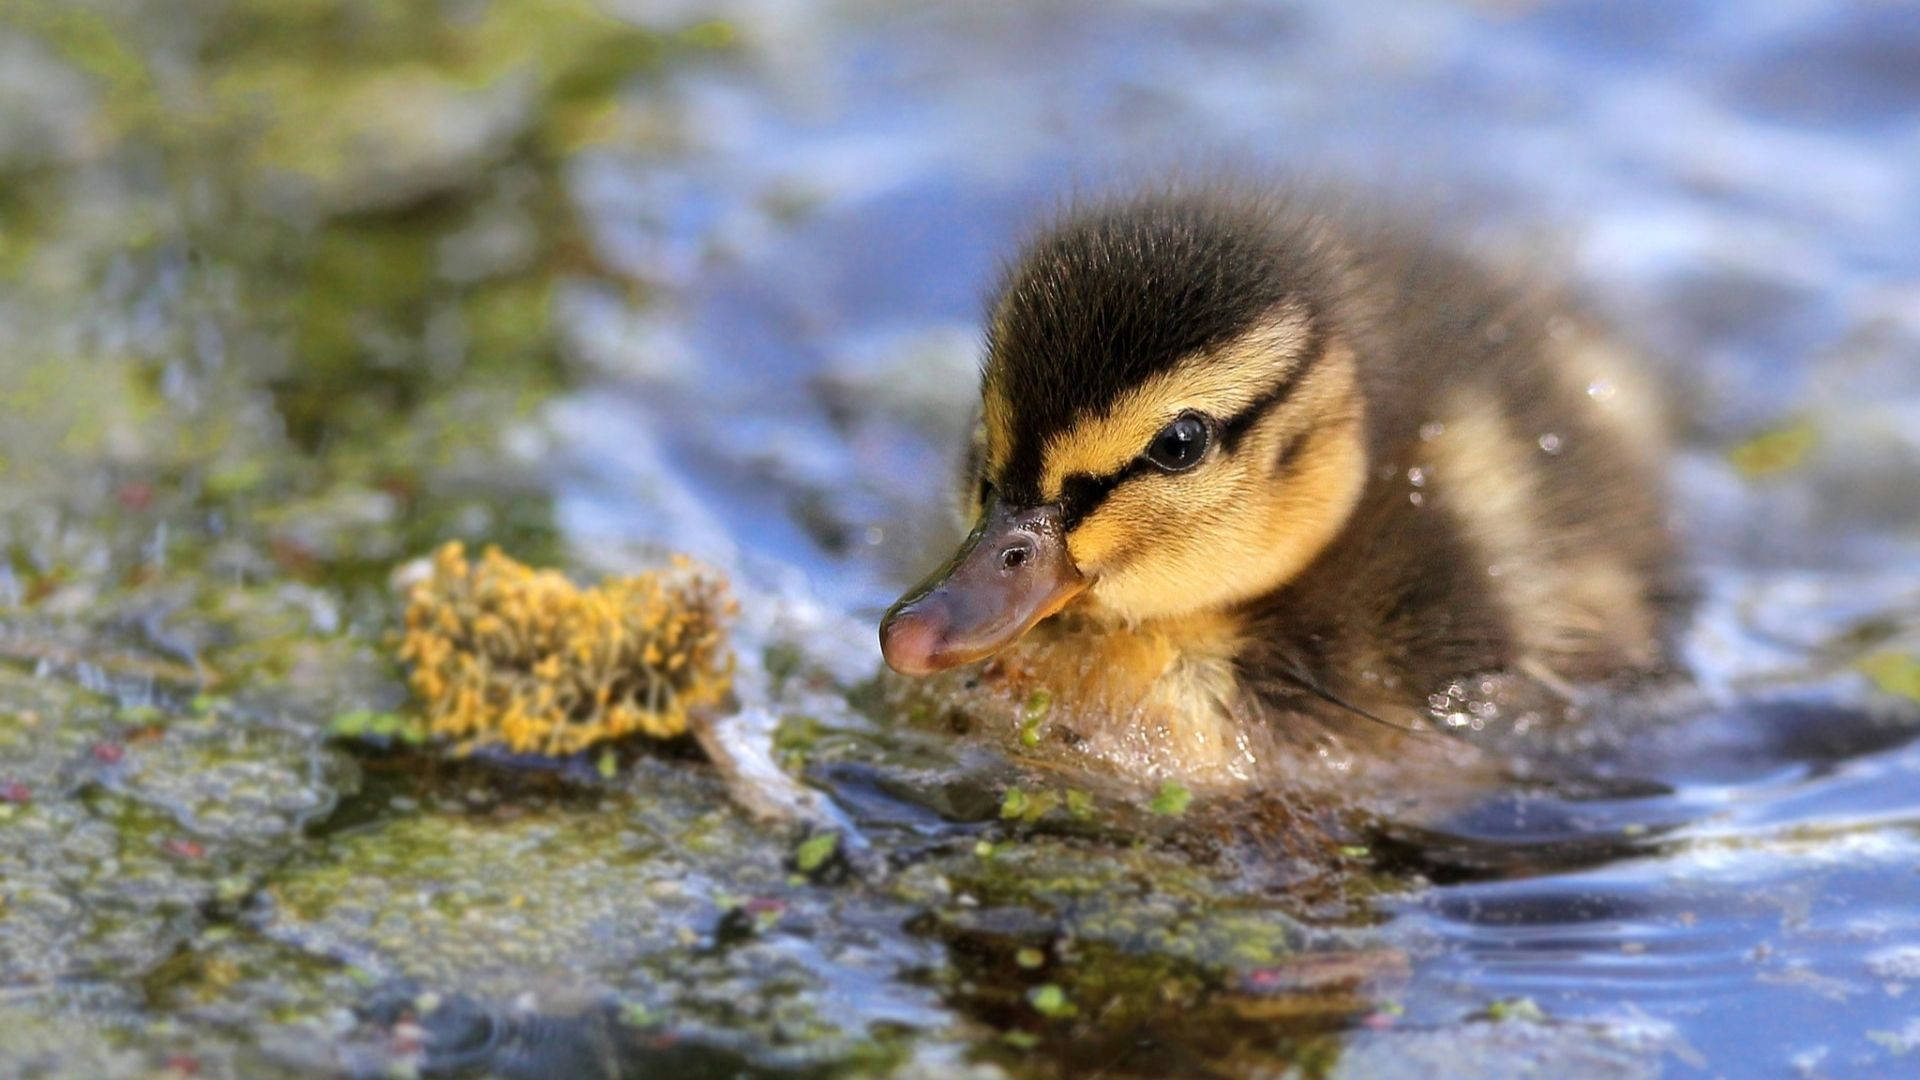 Sparkling Baby Duck